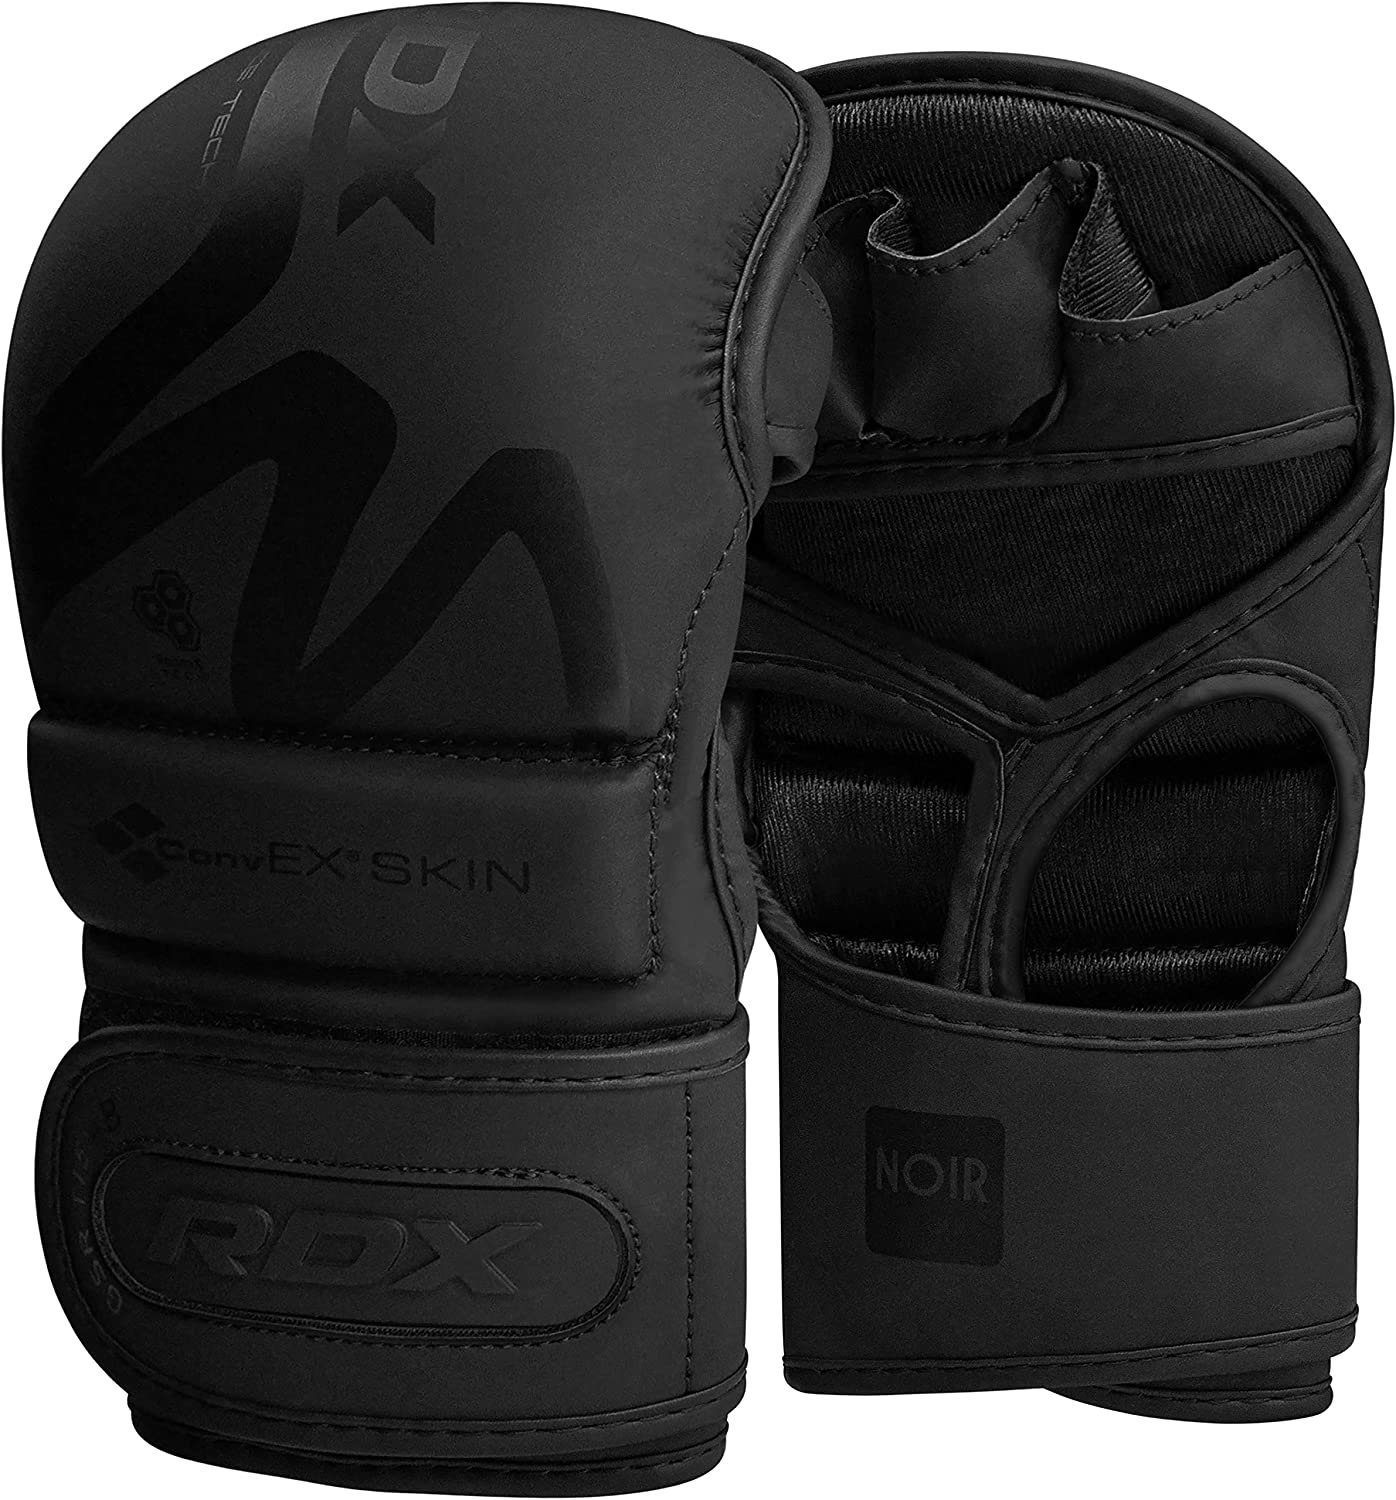 MMA MMA-Handschuhe Kampfsport Sports Handschuhe, Professionelle Sparring Kickboxen RDX RDX